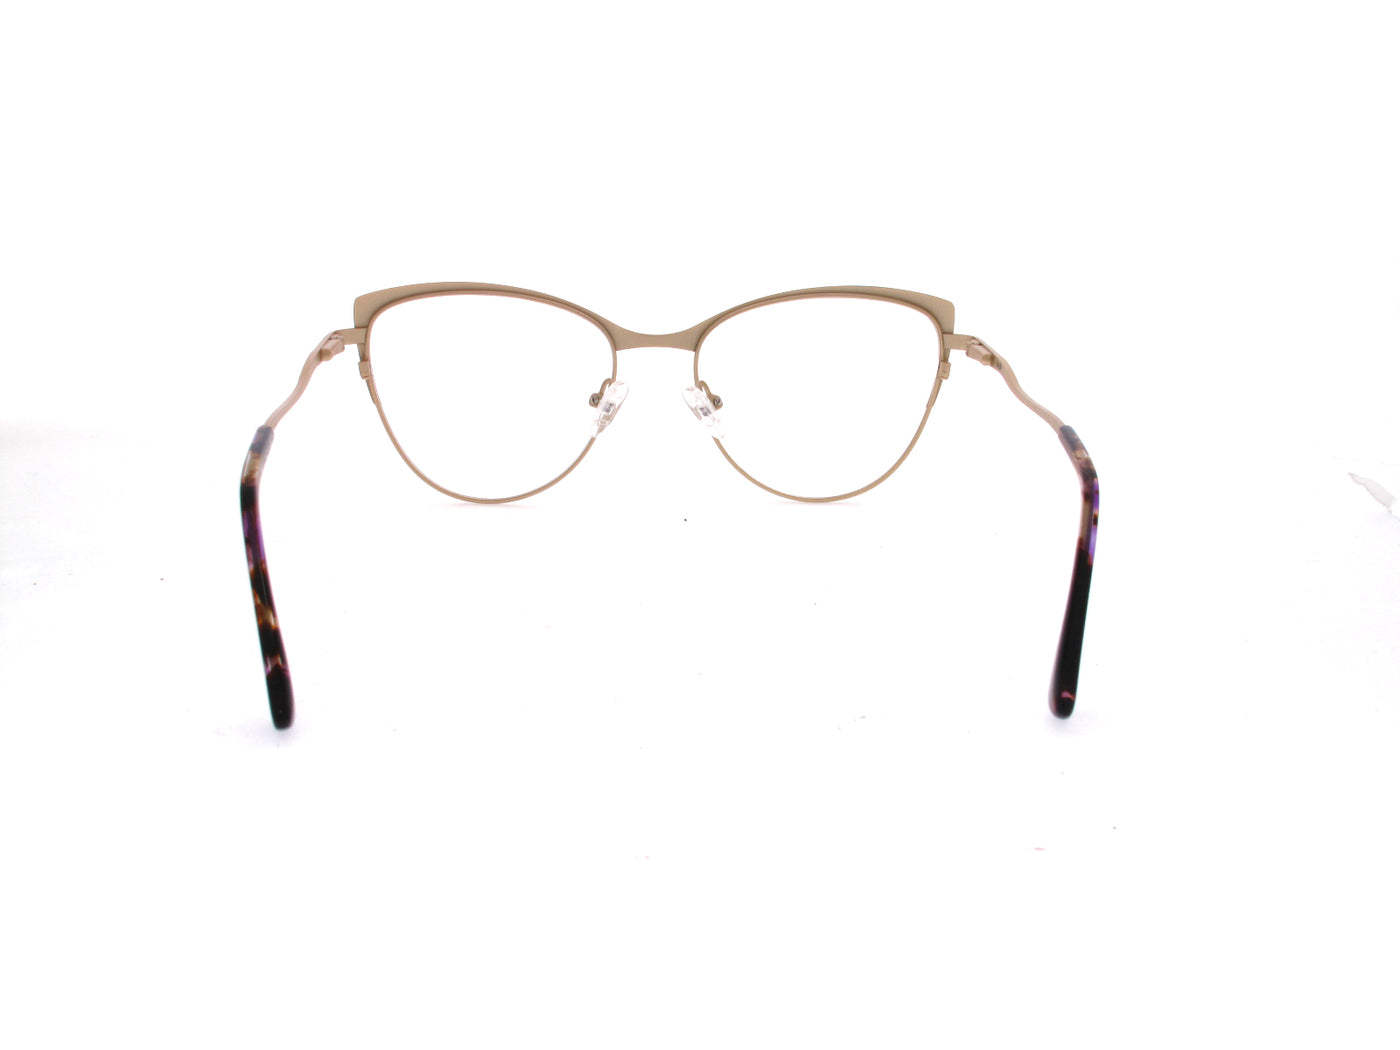 Cateye Glasses 956552